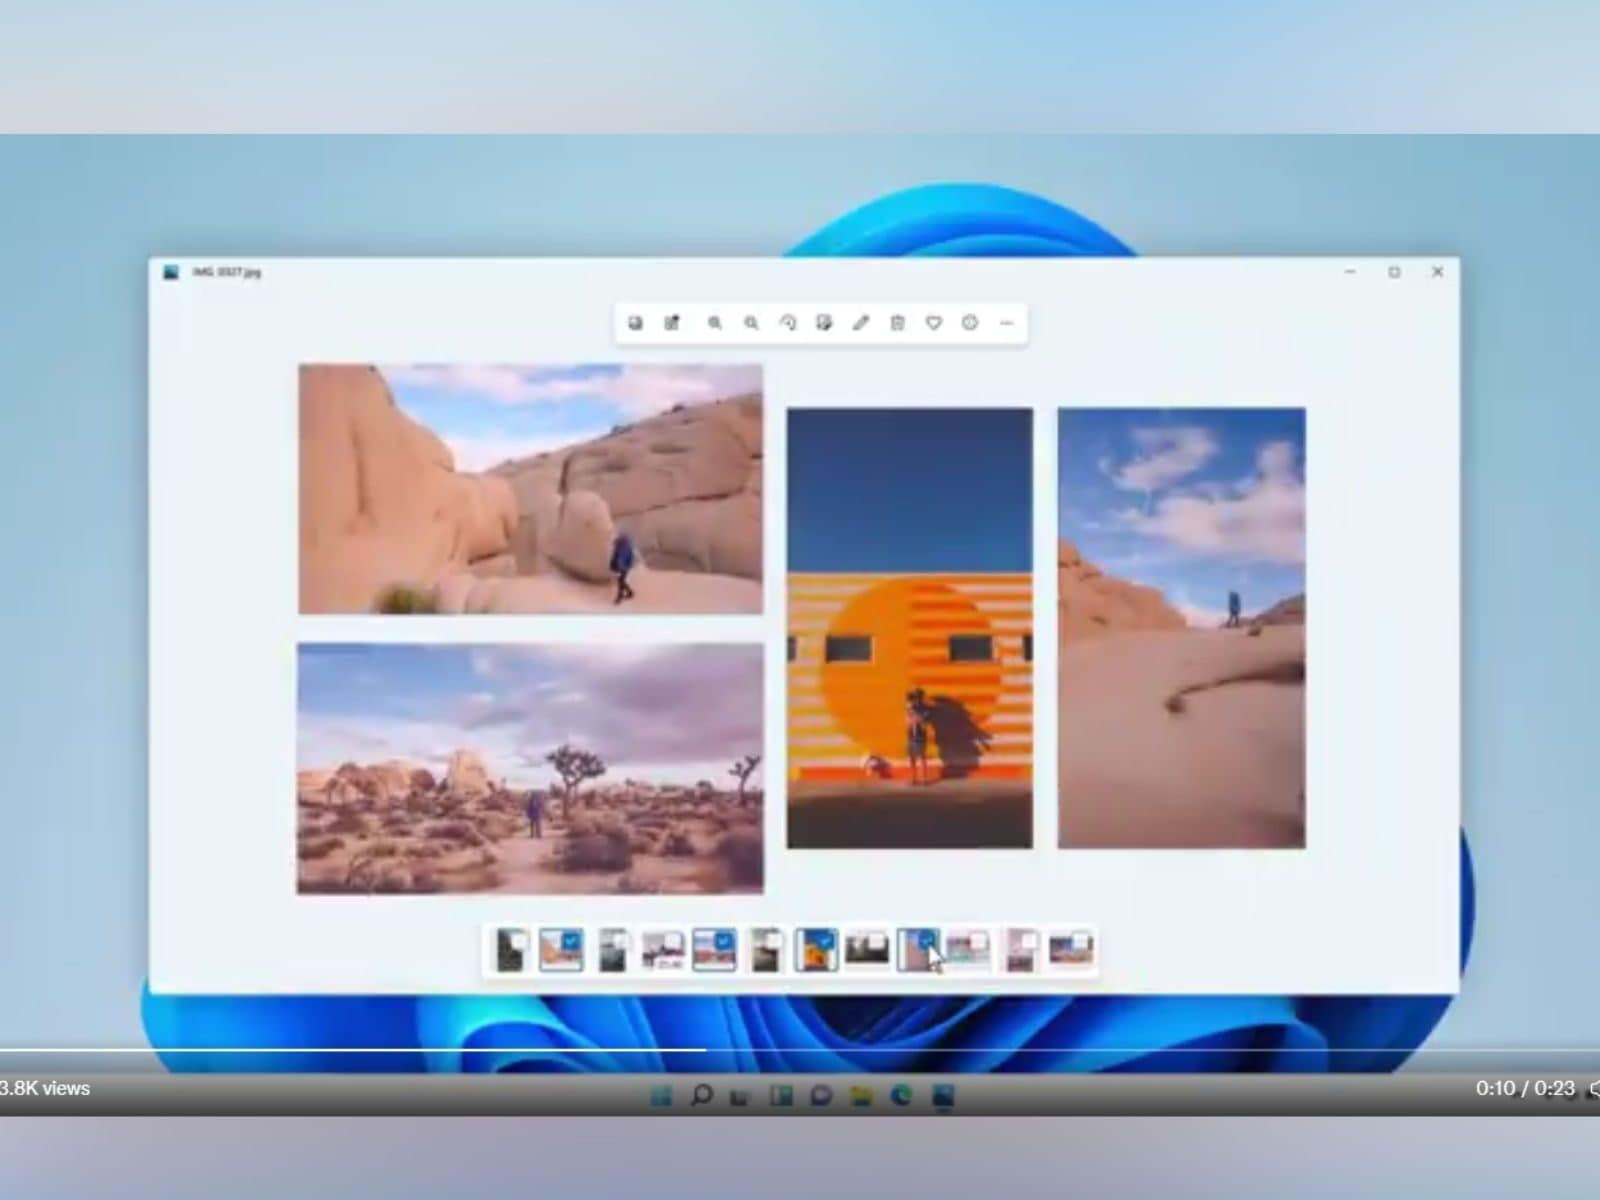 mac desktop icons missing